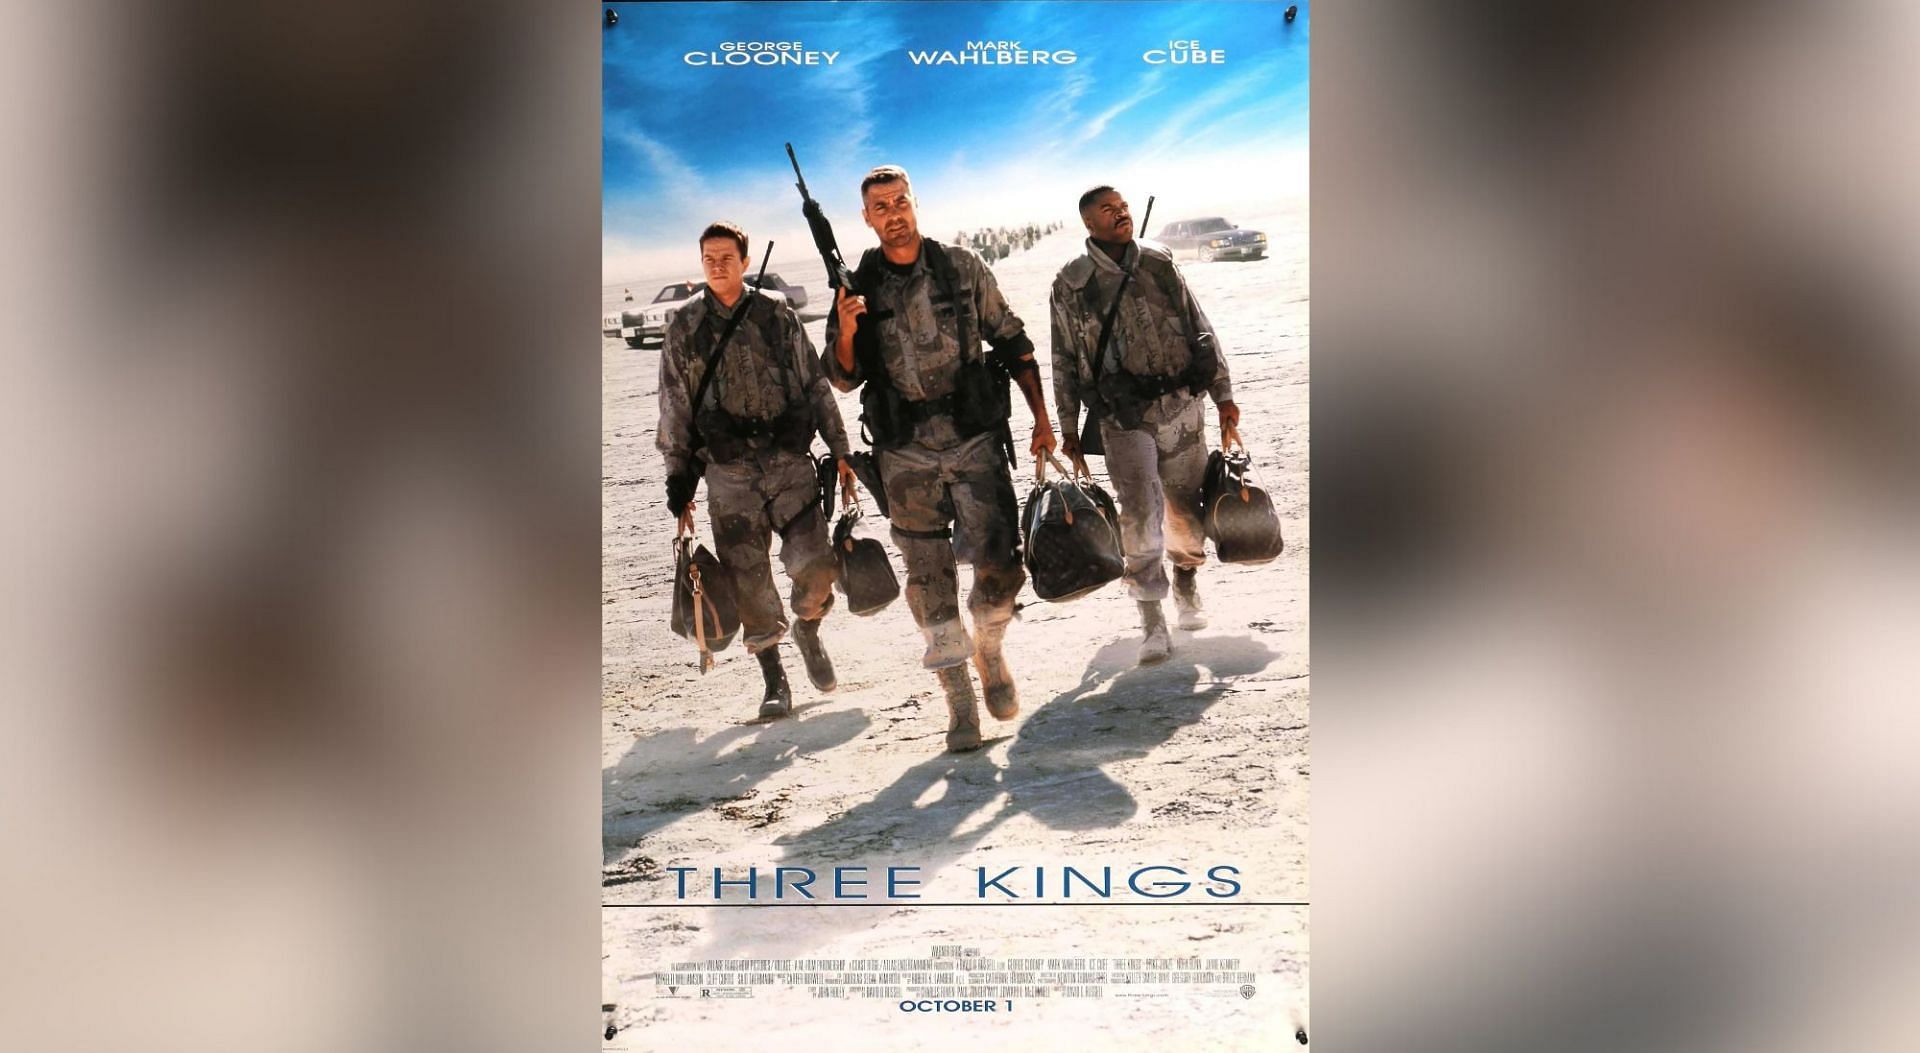 Three Kings (Image via Warner Bros.)